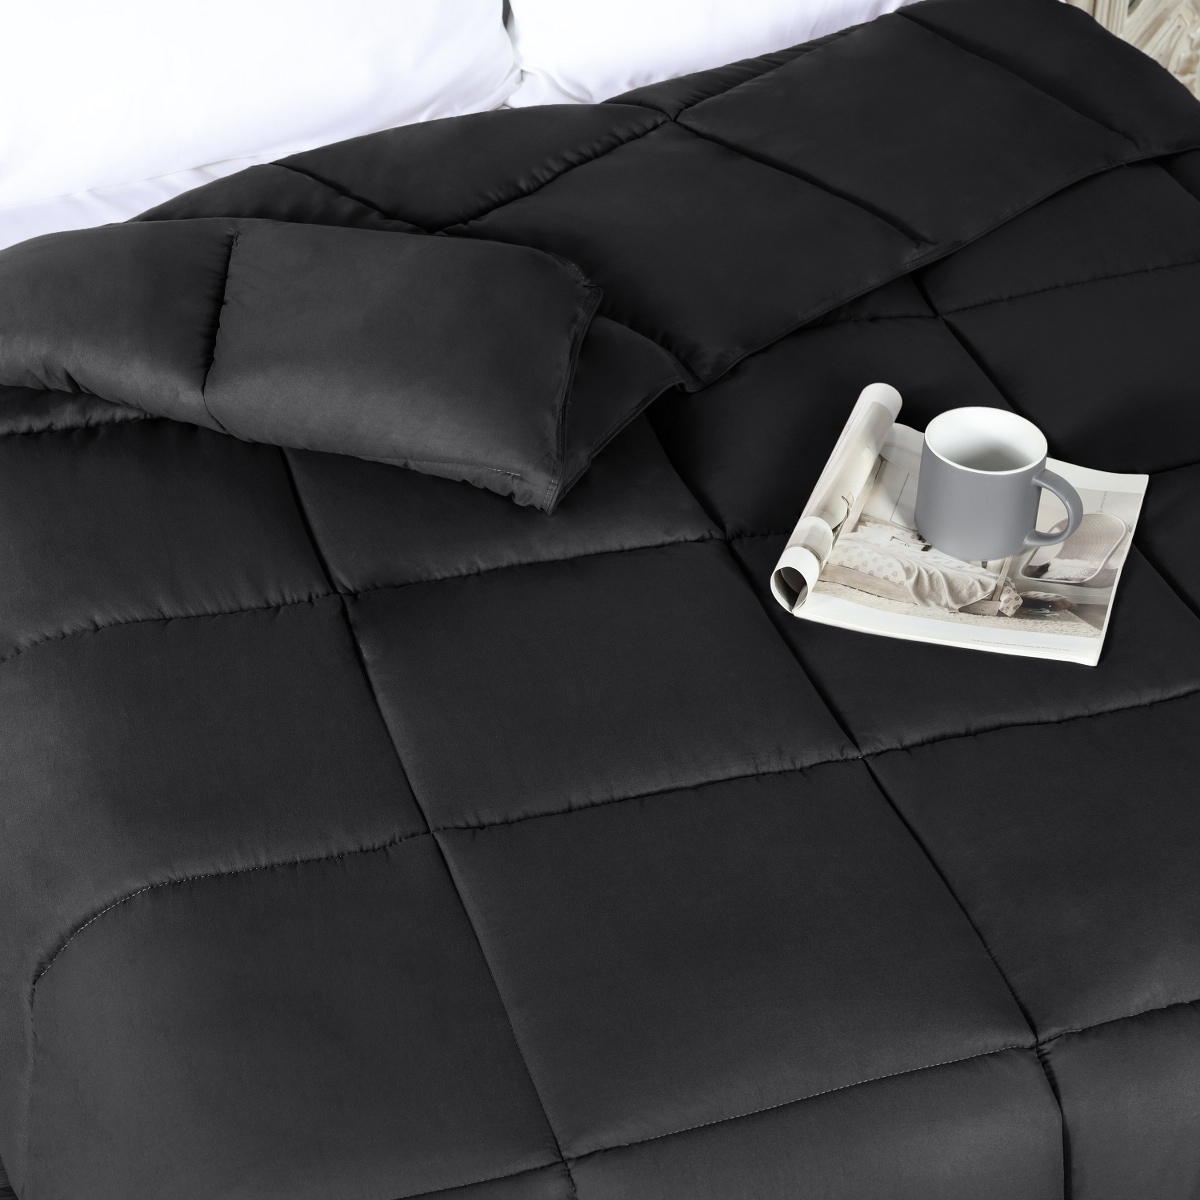 Superior Classic All-Season Reversible Down Alternative Comforter